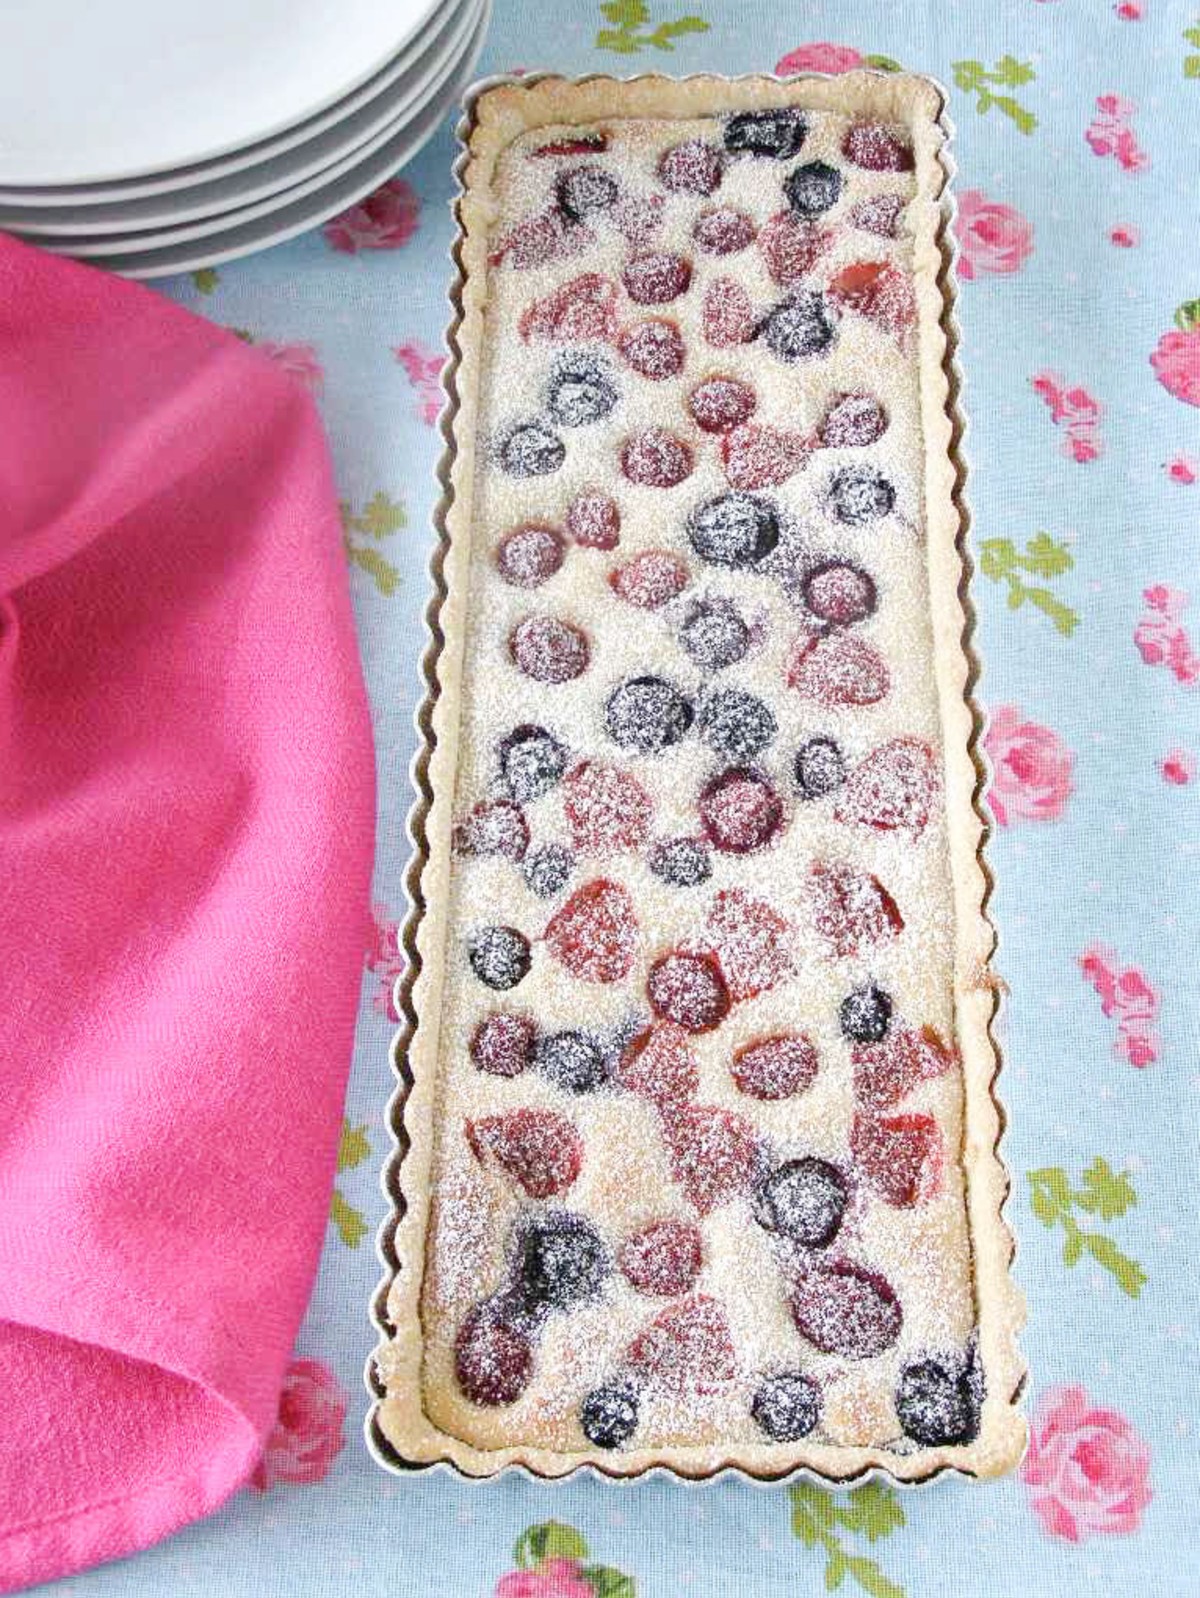 Summer Berry & Almond Cheesecake Tart